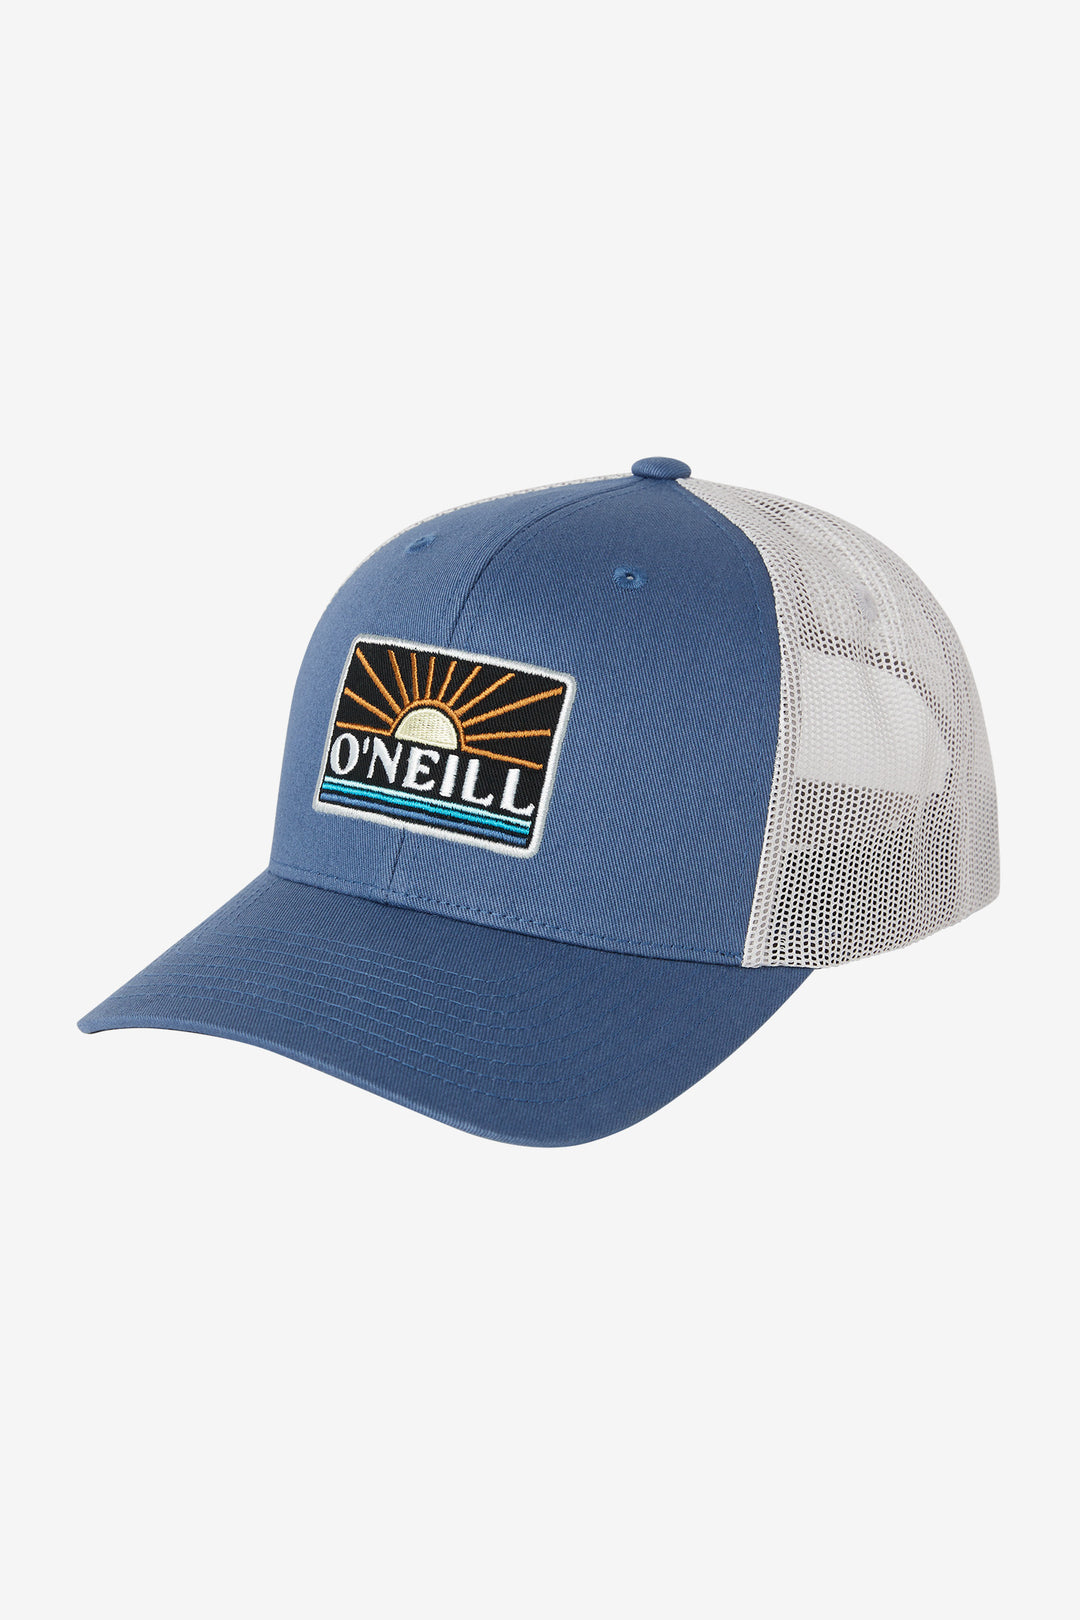 O'Neill Headquarters Trucker Hat Apparel O'Neill Copen Blue  